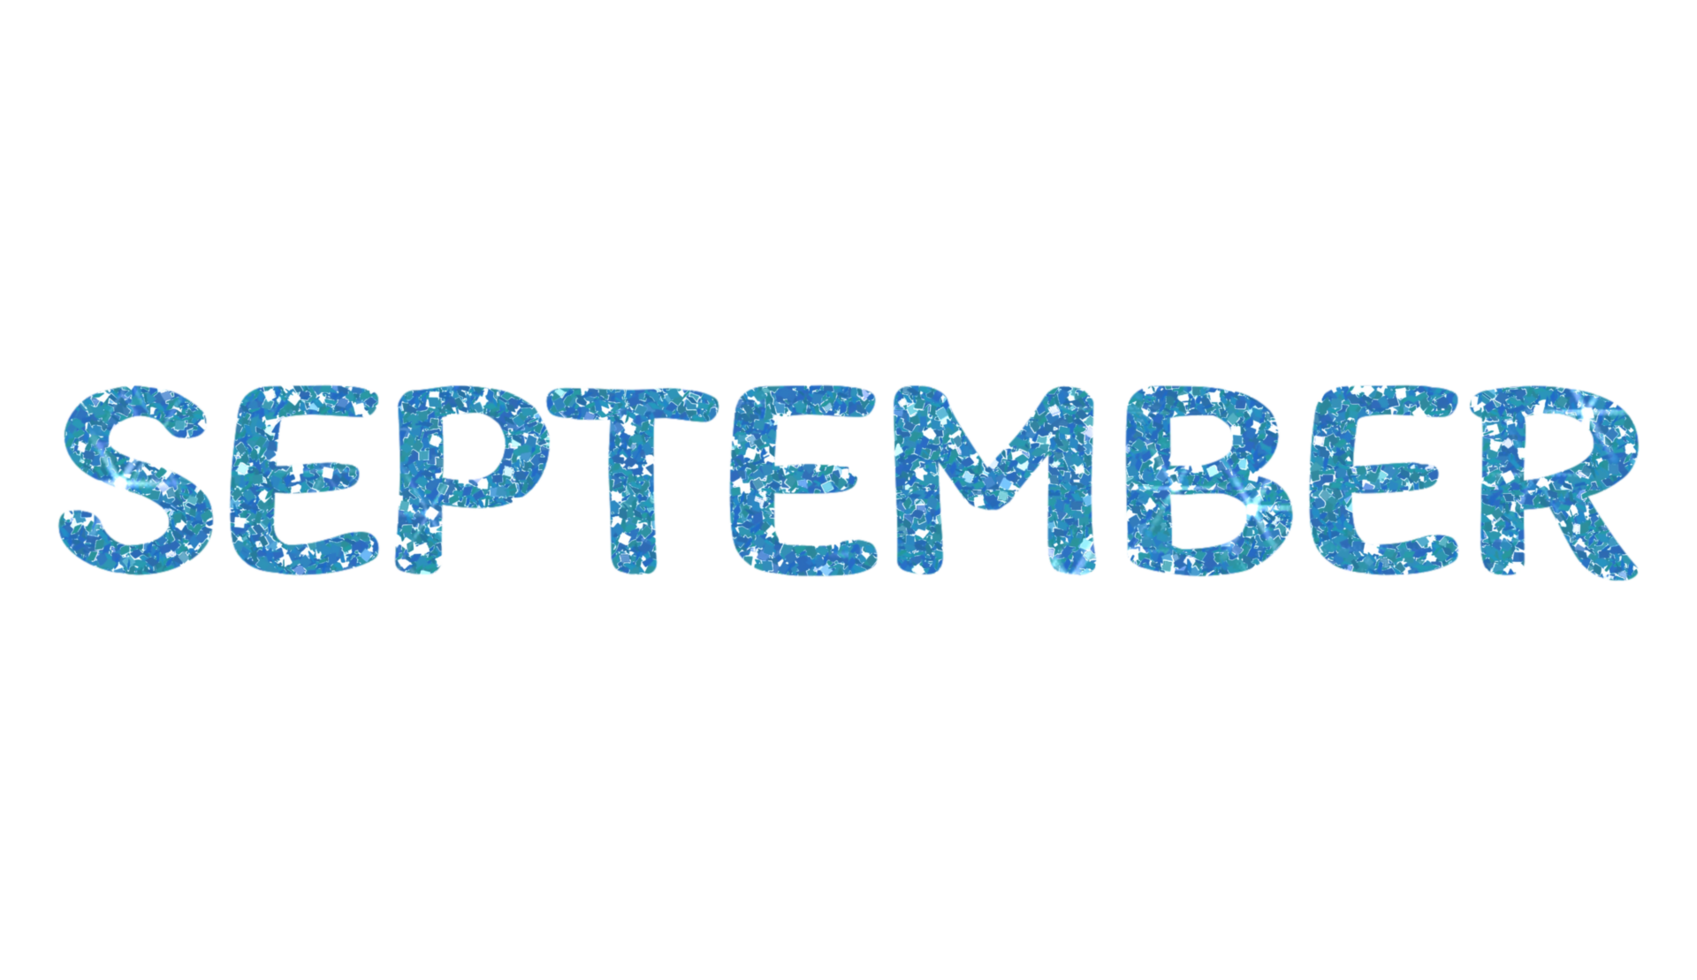 Blue glitter SEPTEMBER Letters Icon. September sign. Design for decorating, background, wallpaper, illustration. png